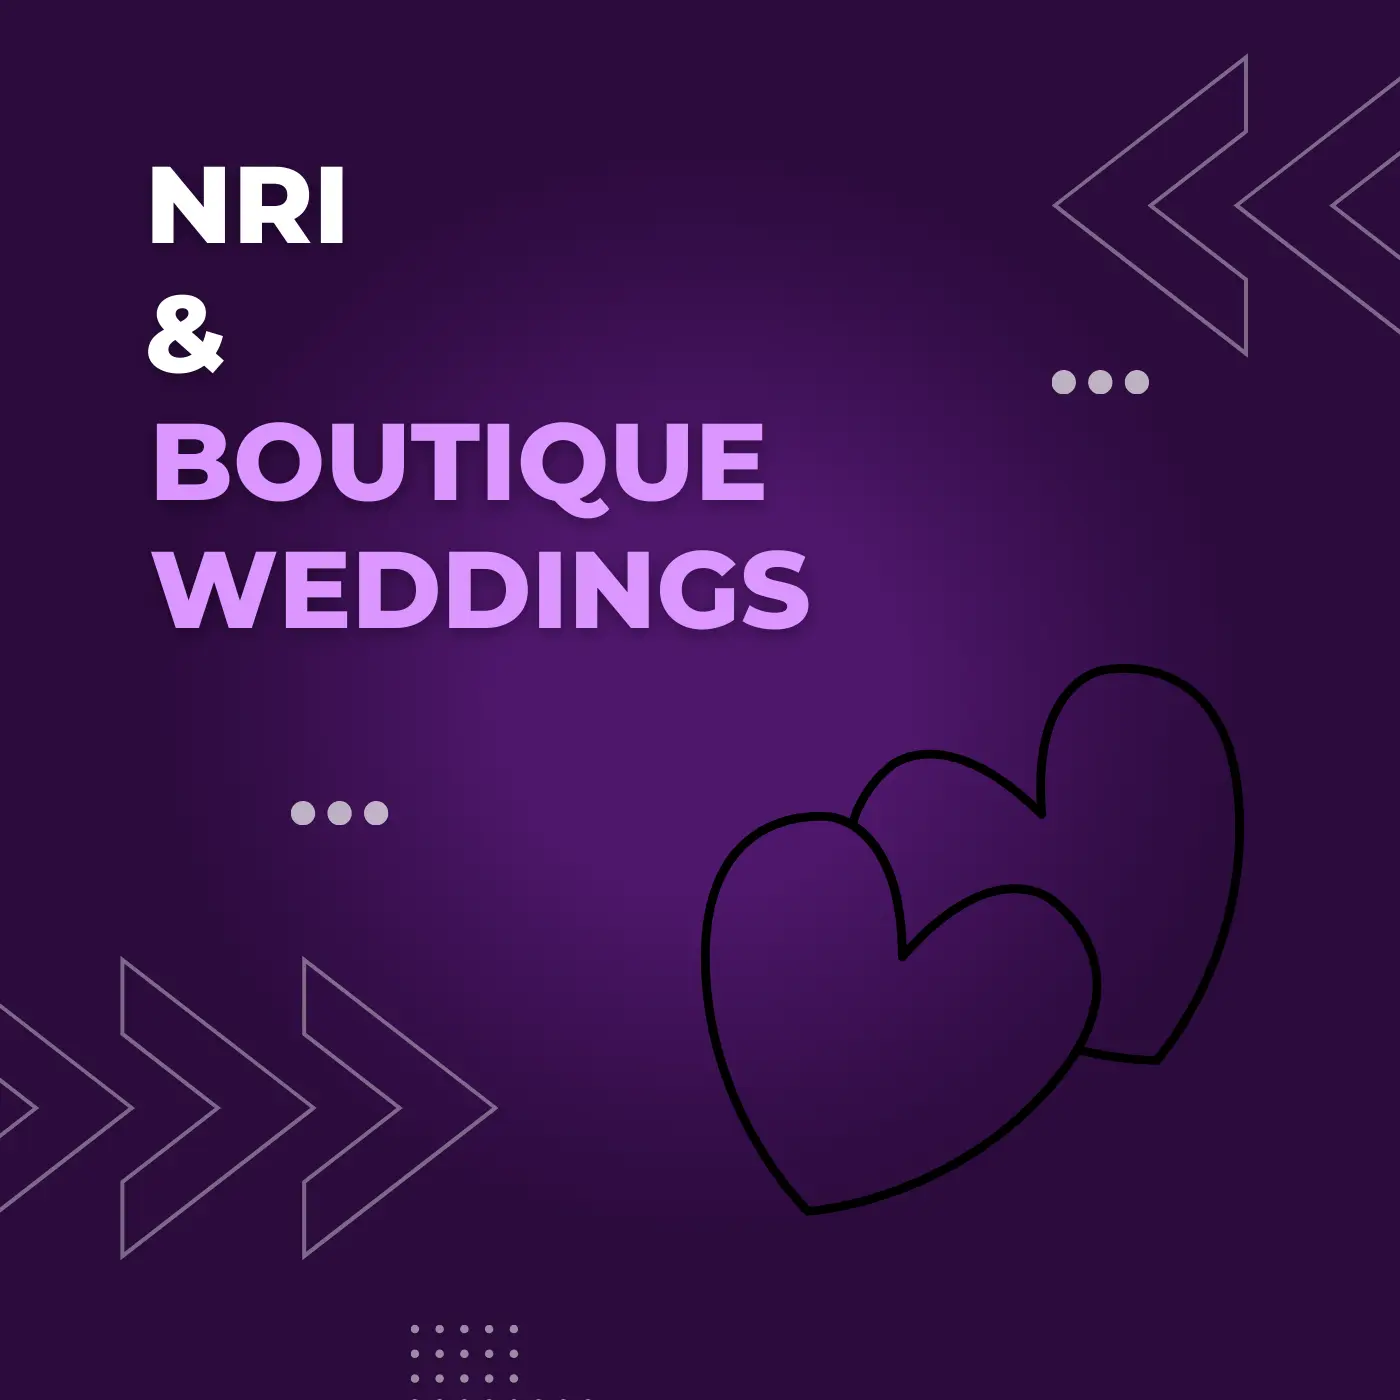 NRI Wedding and Boutique Weddings